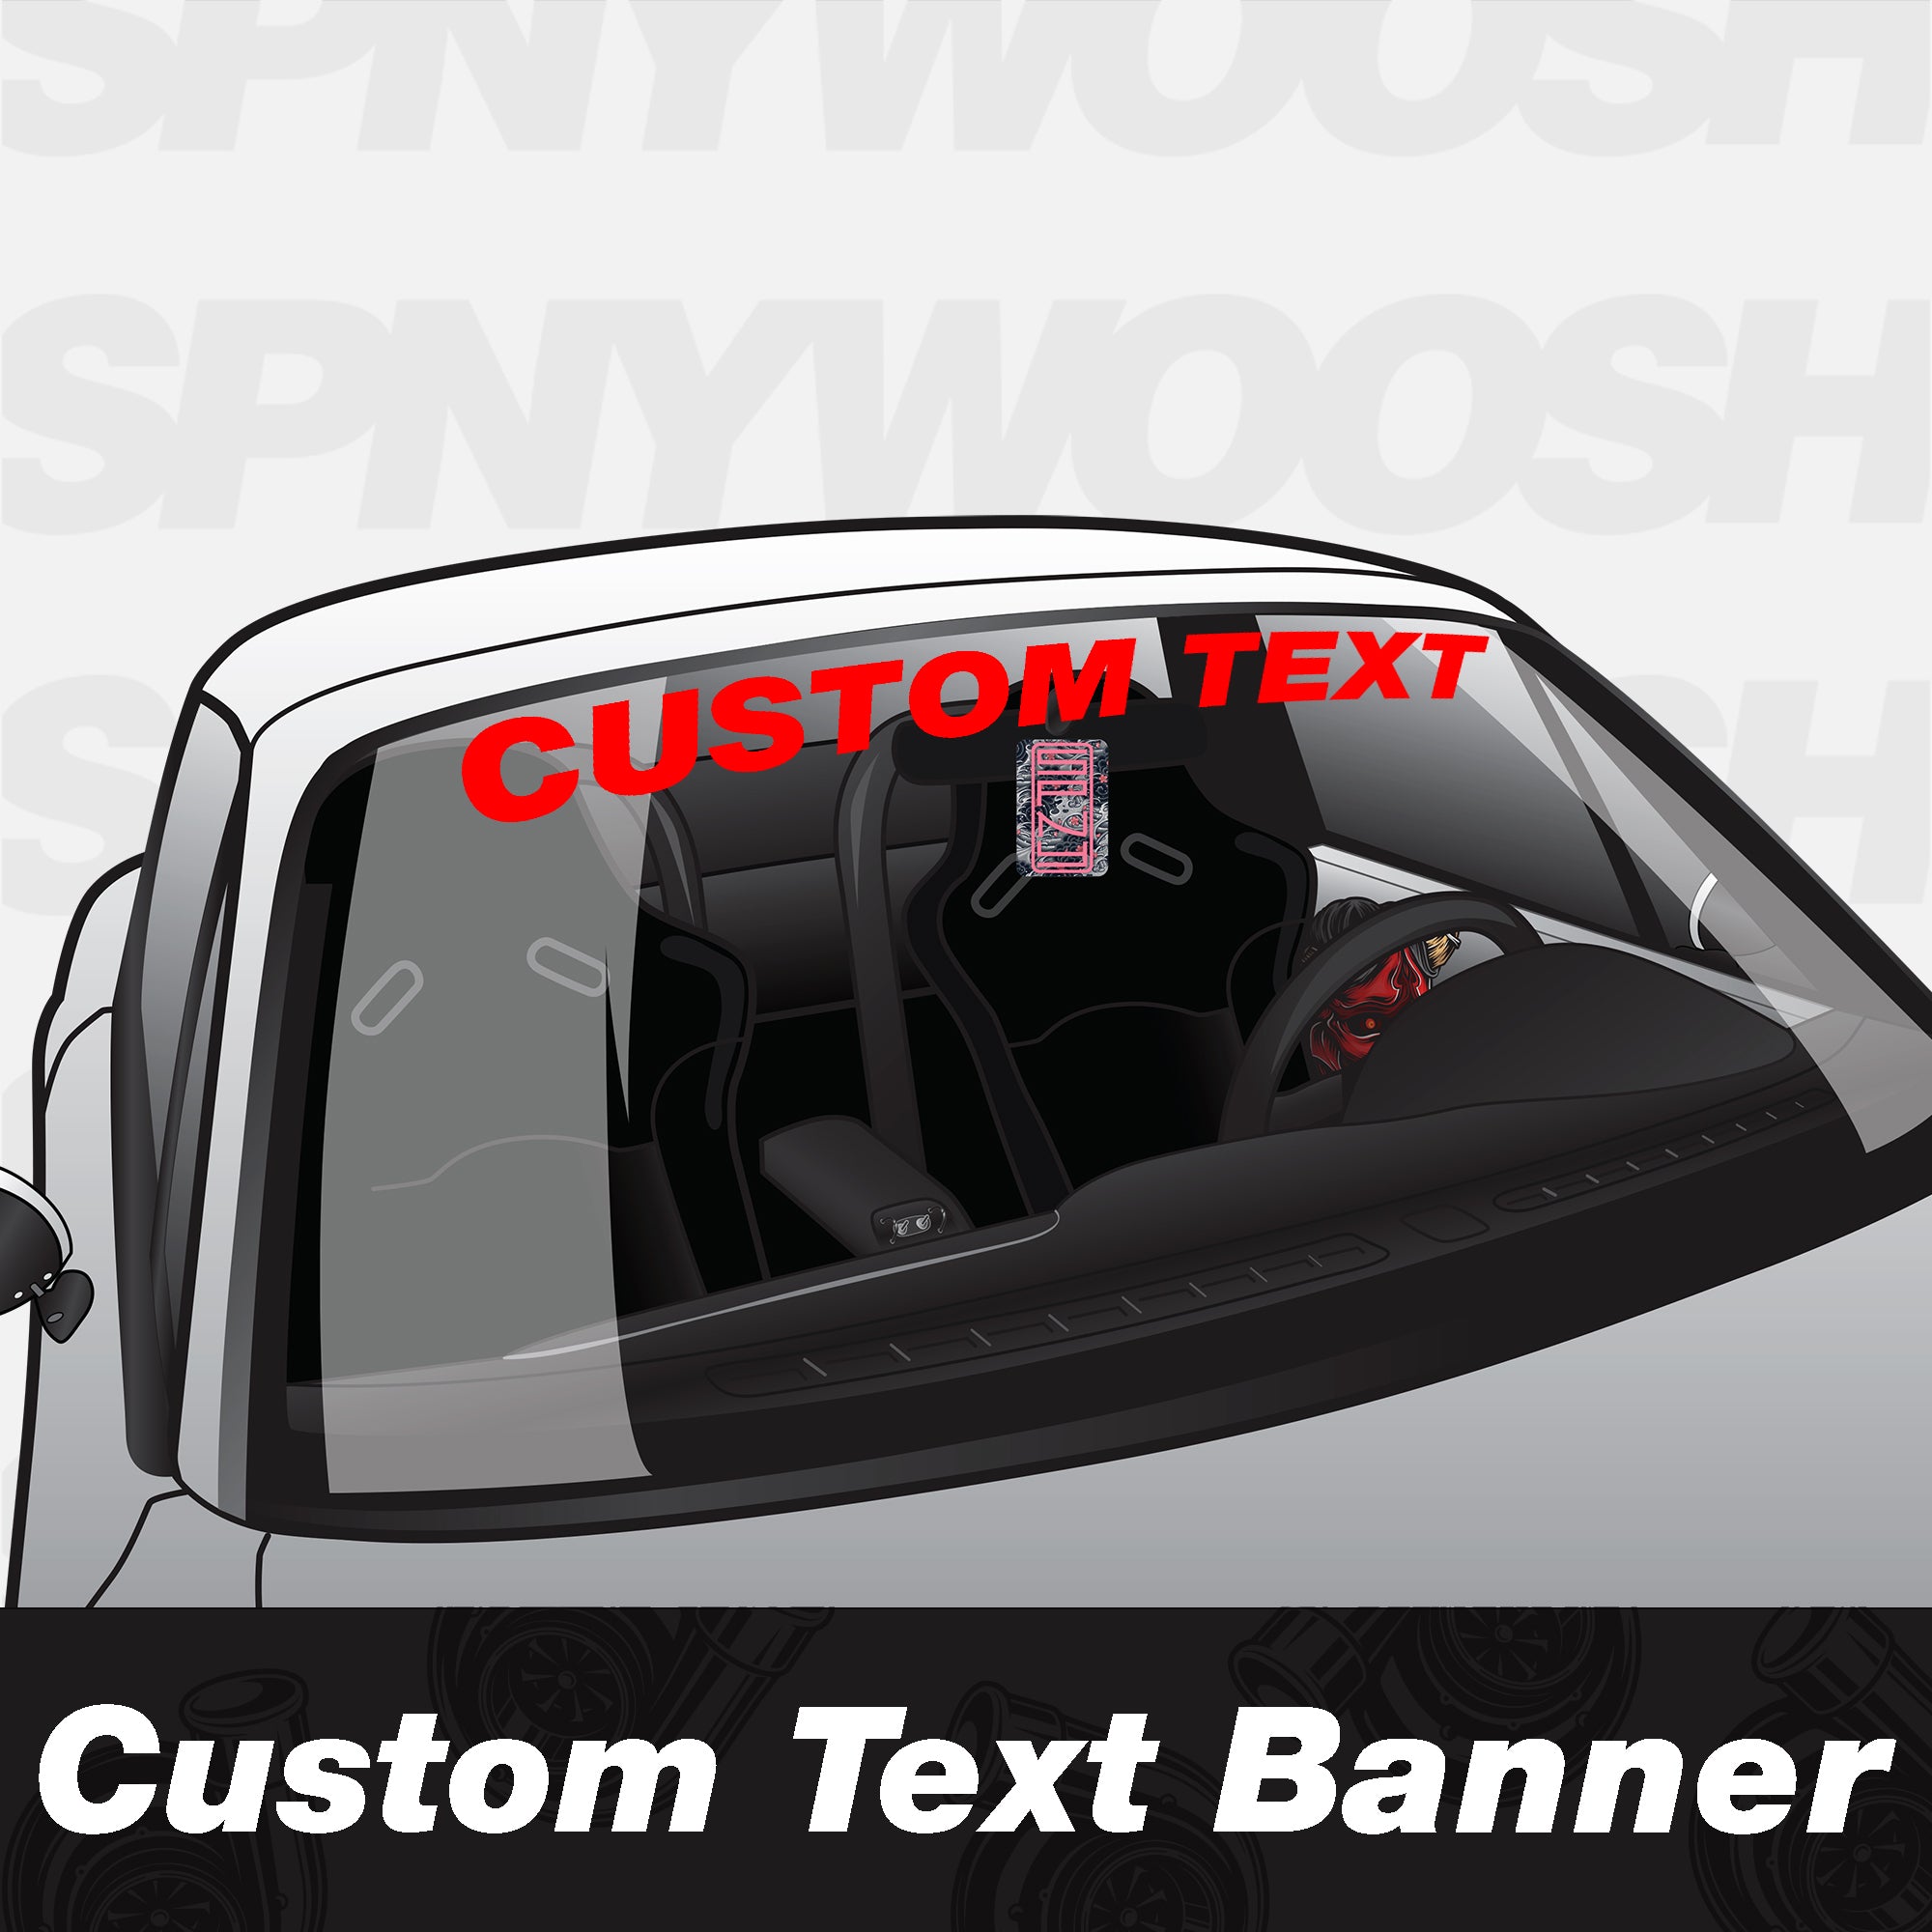 M Performance Car Windscreen Windshield Sticker Decal Fit for BMW Autco